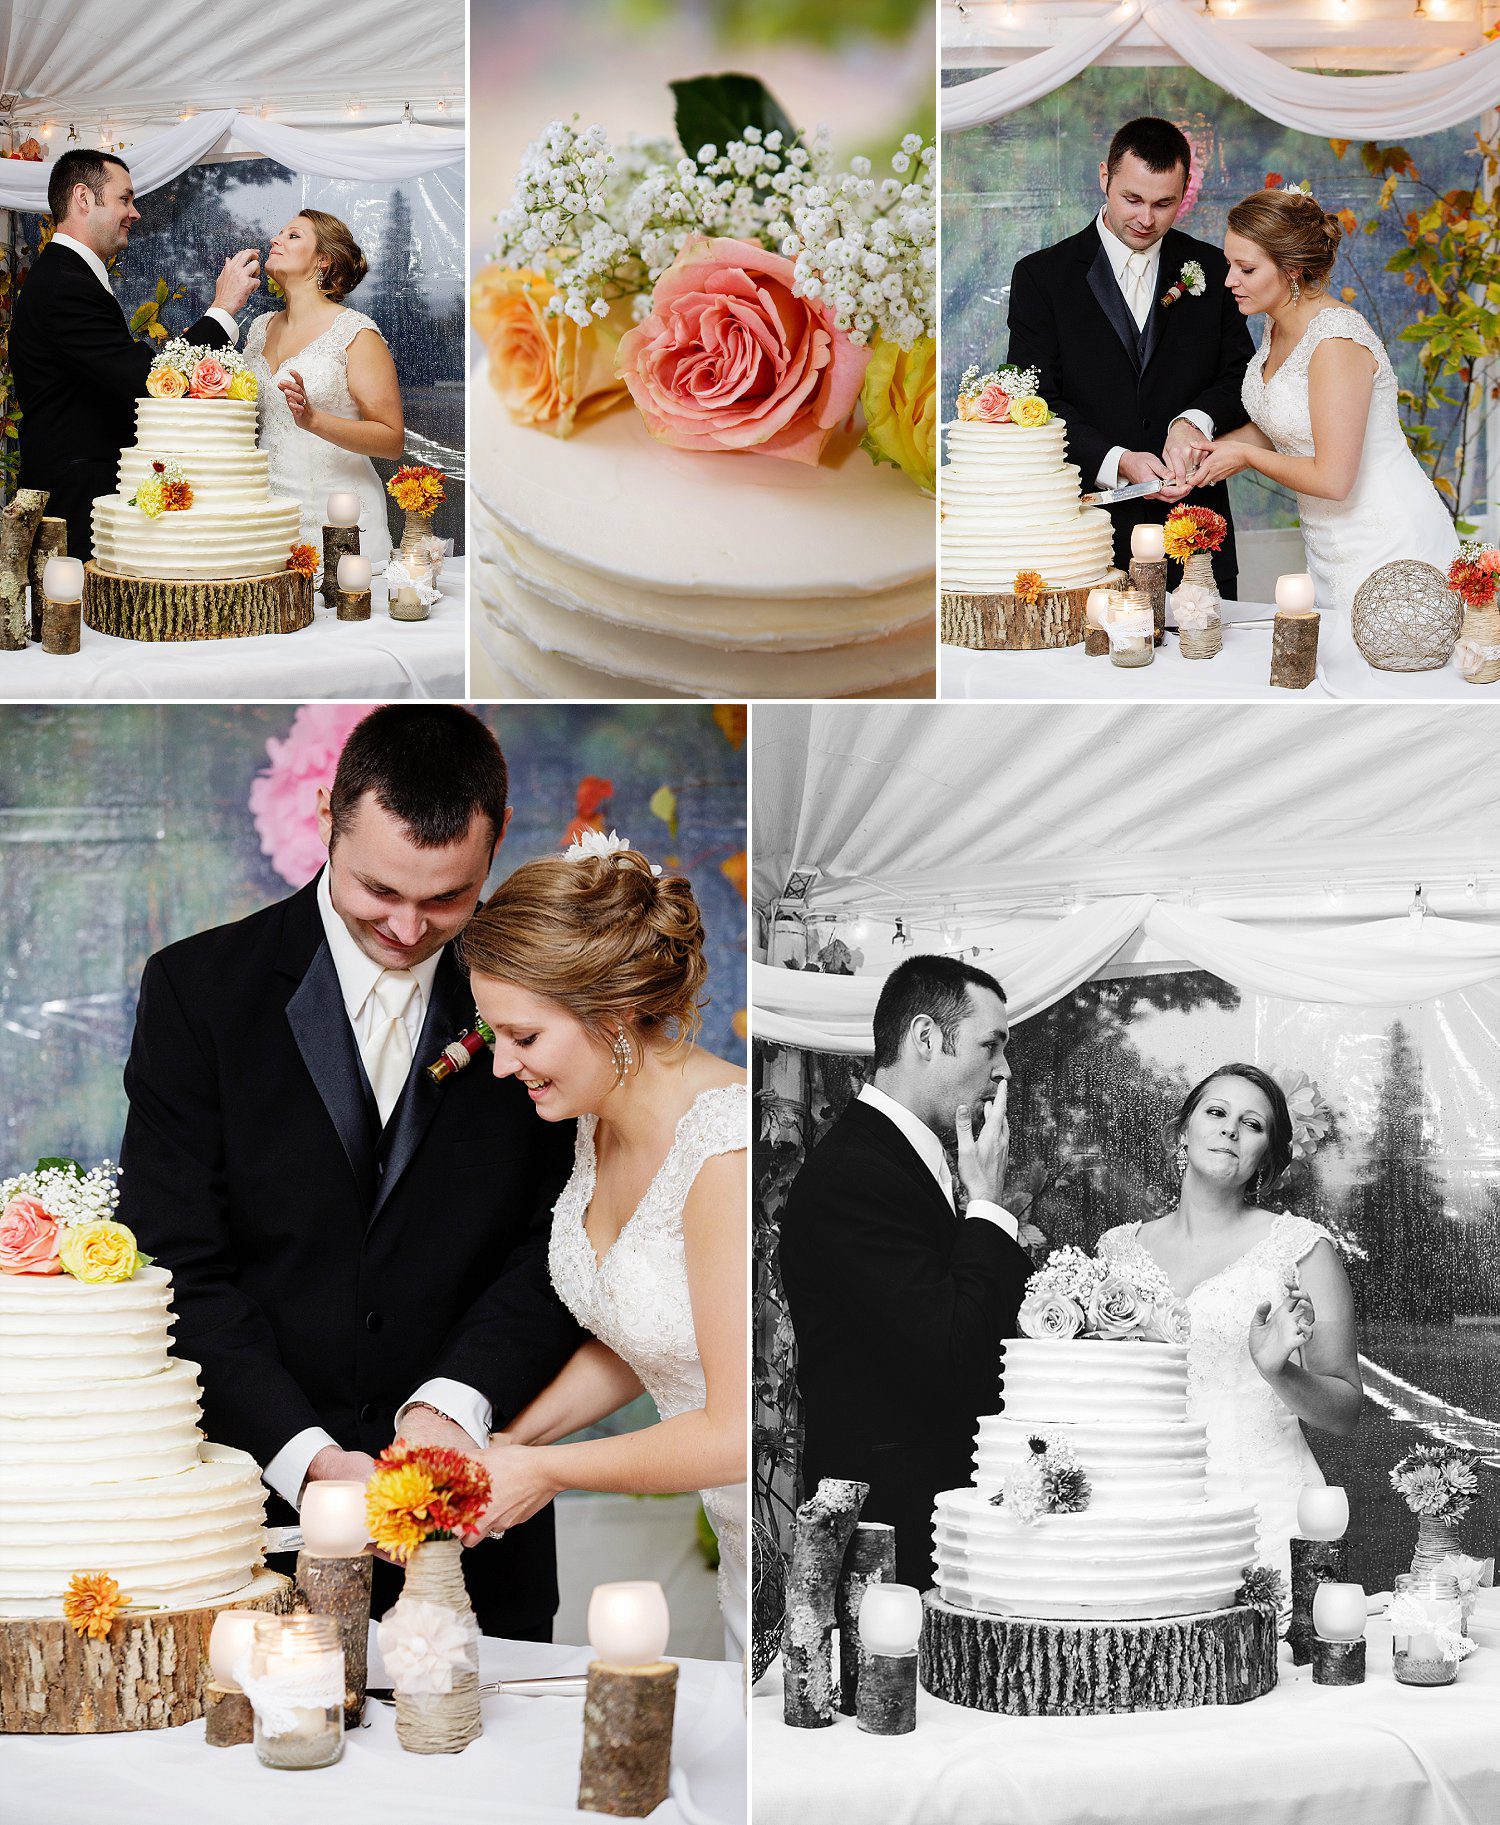 Bride and groom cut their wedding cake at Meadow Wind B&B | Hebron, NH